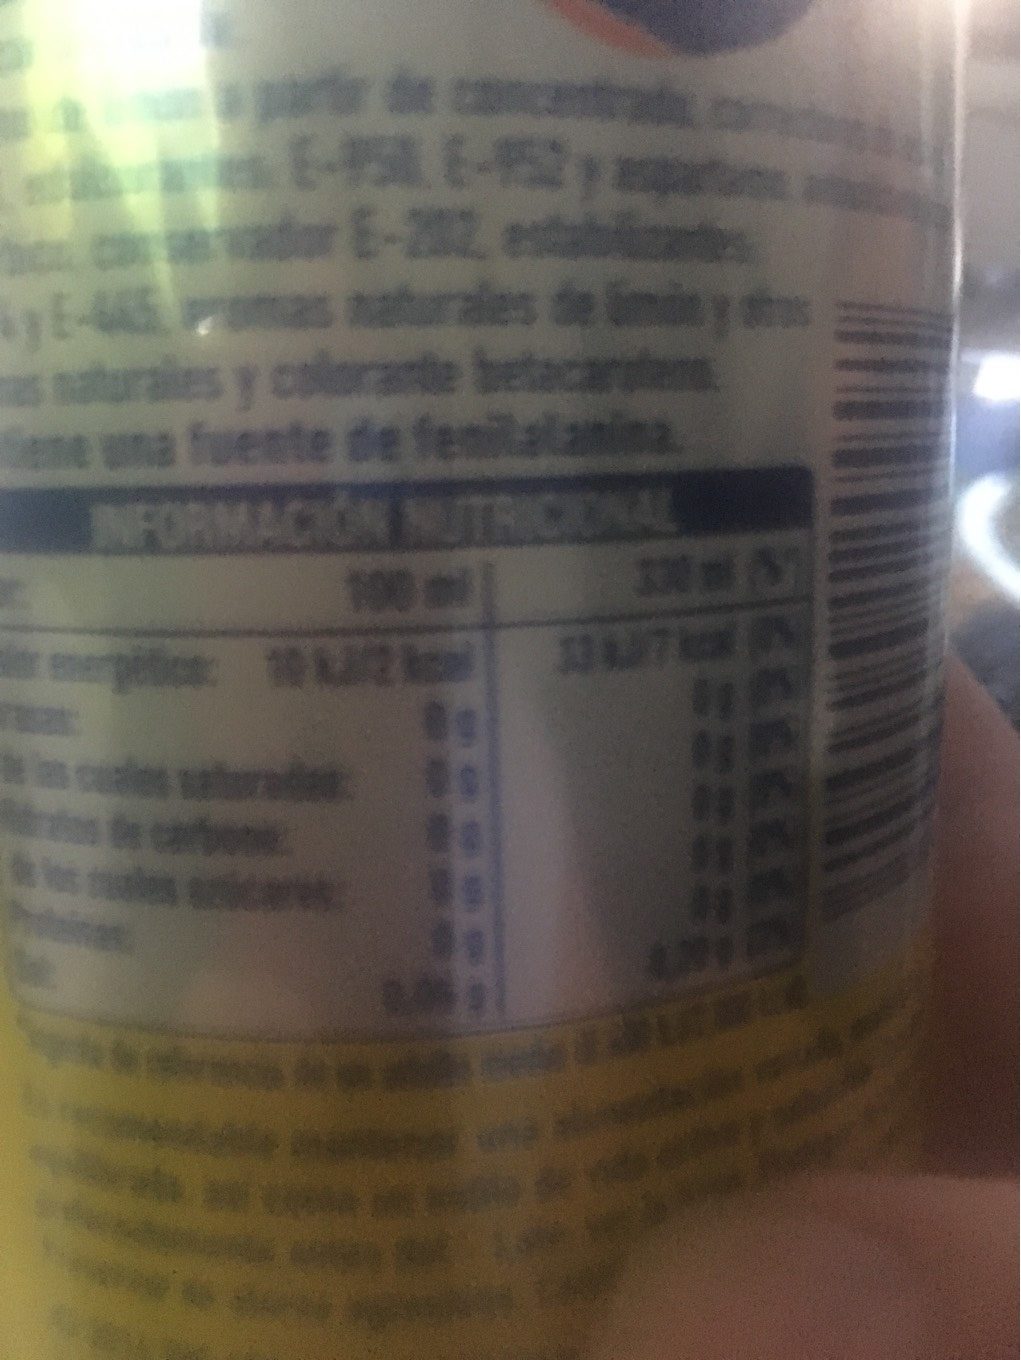 Fanta limón zero azúcares - Tableau nutritionnel